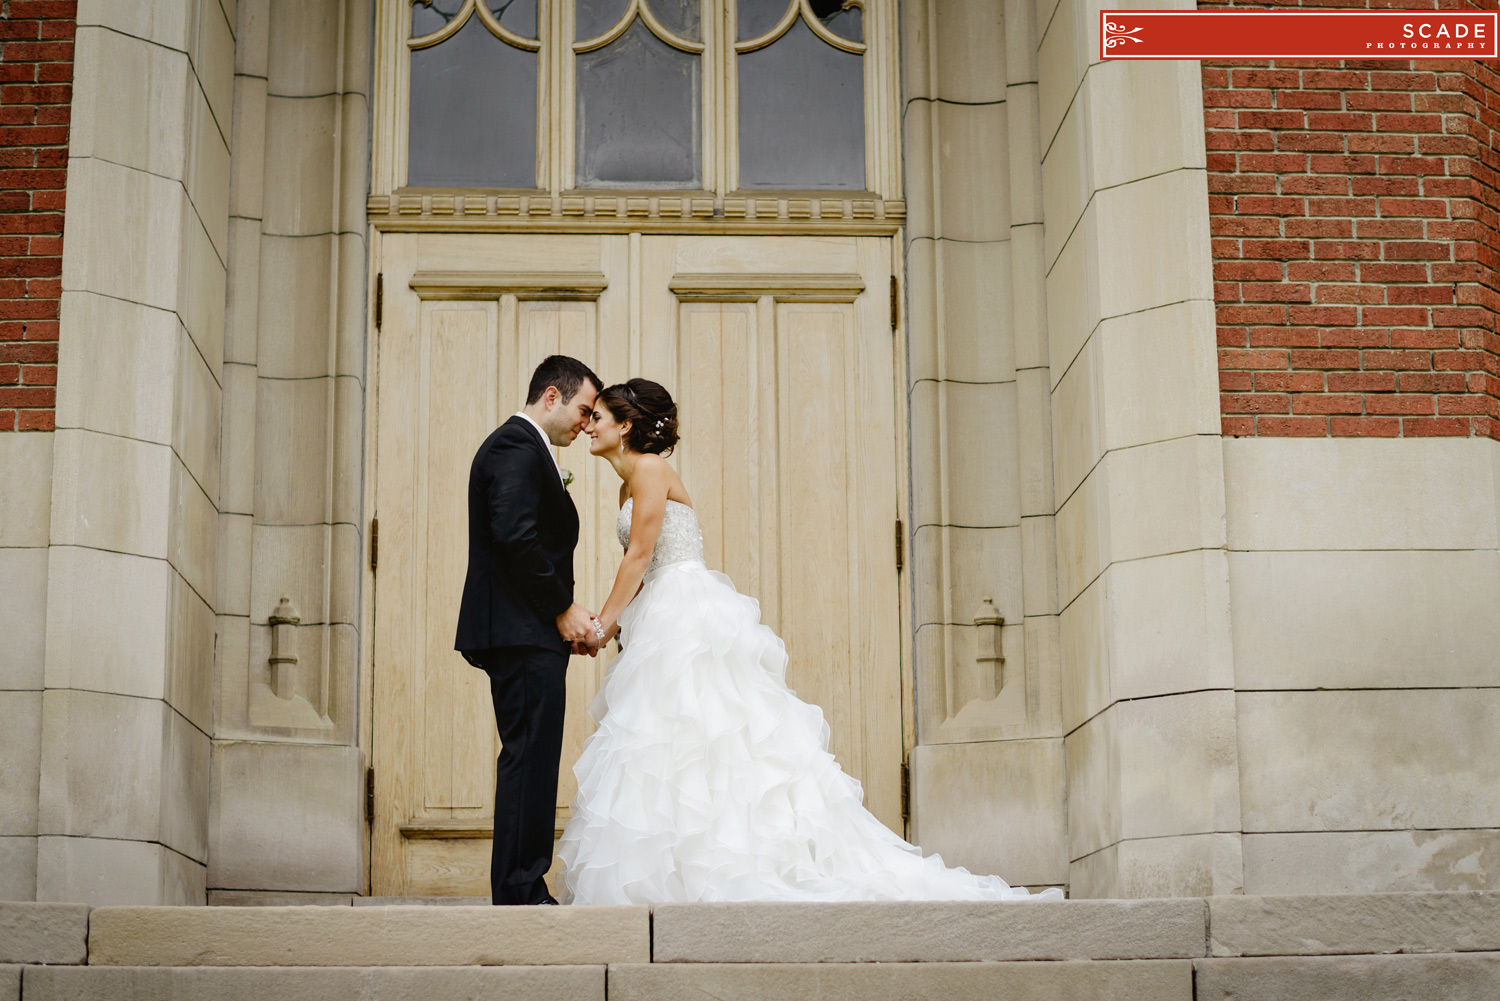 Italian Wedding Photography Edmonton - Laura and Anthony